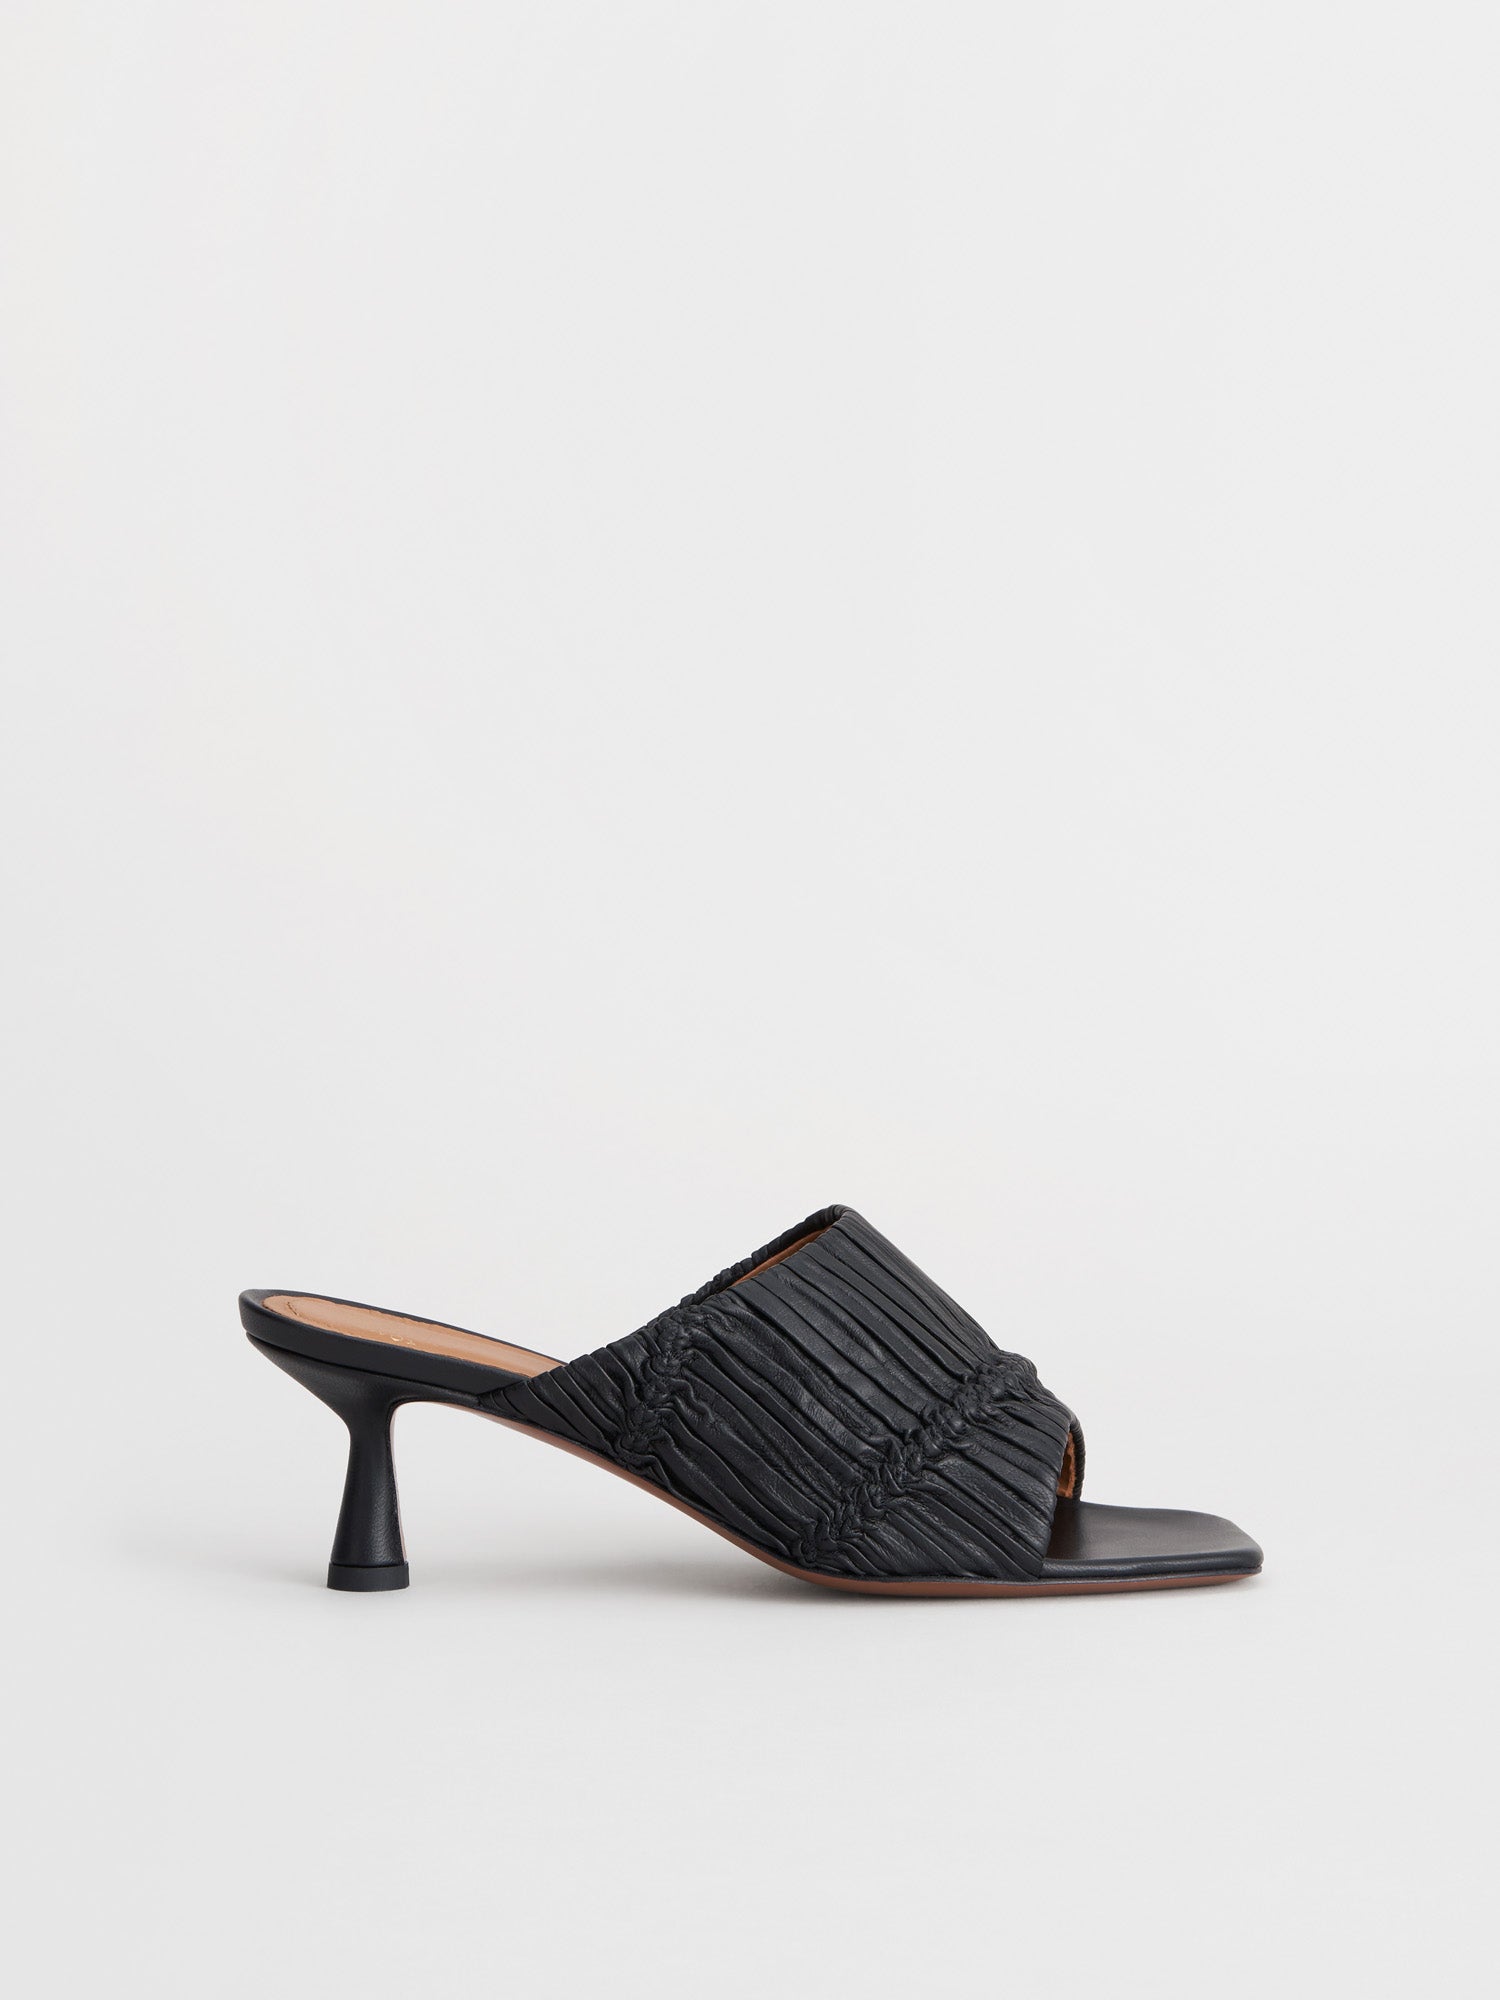 Caserta square-toe leather mules, black